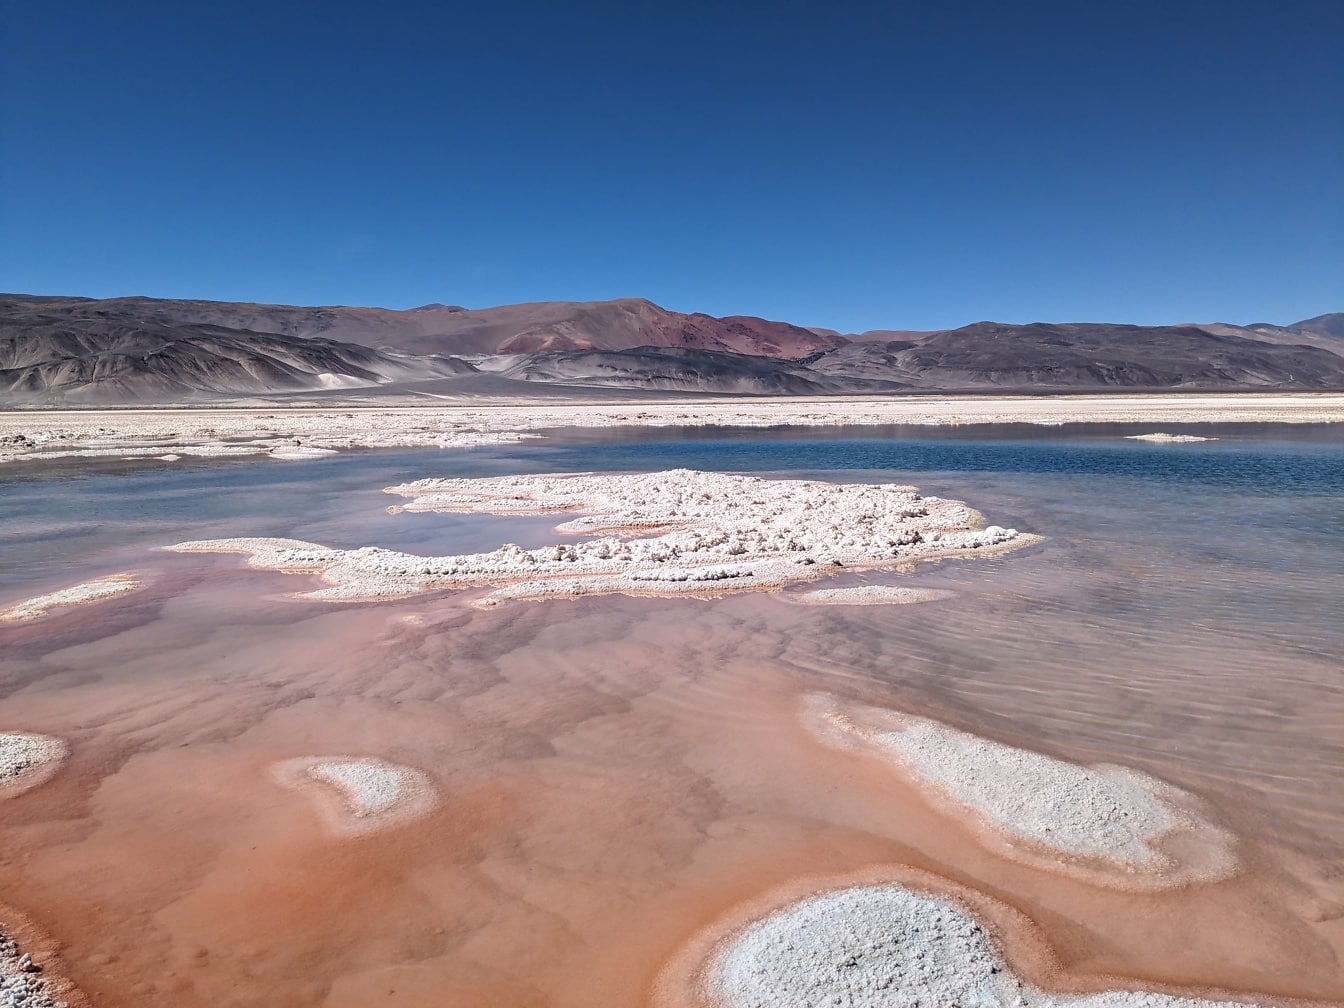 Salt marsh oasis in the Salar de Antofalla desert with salt sediments